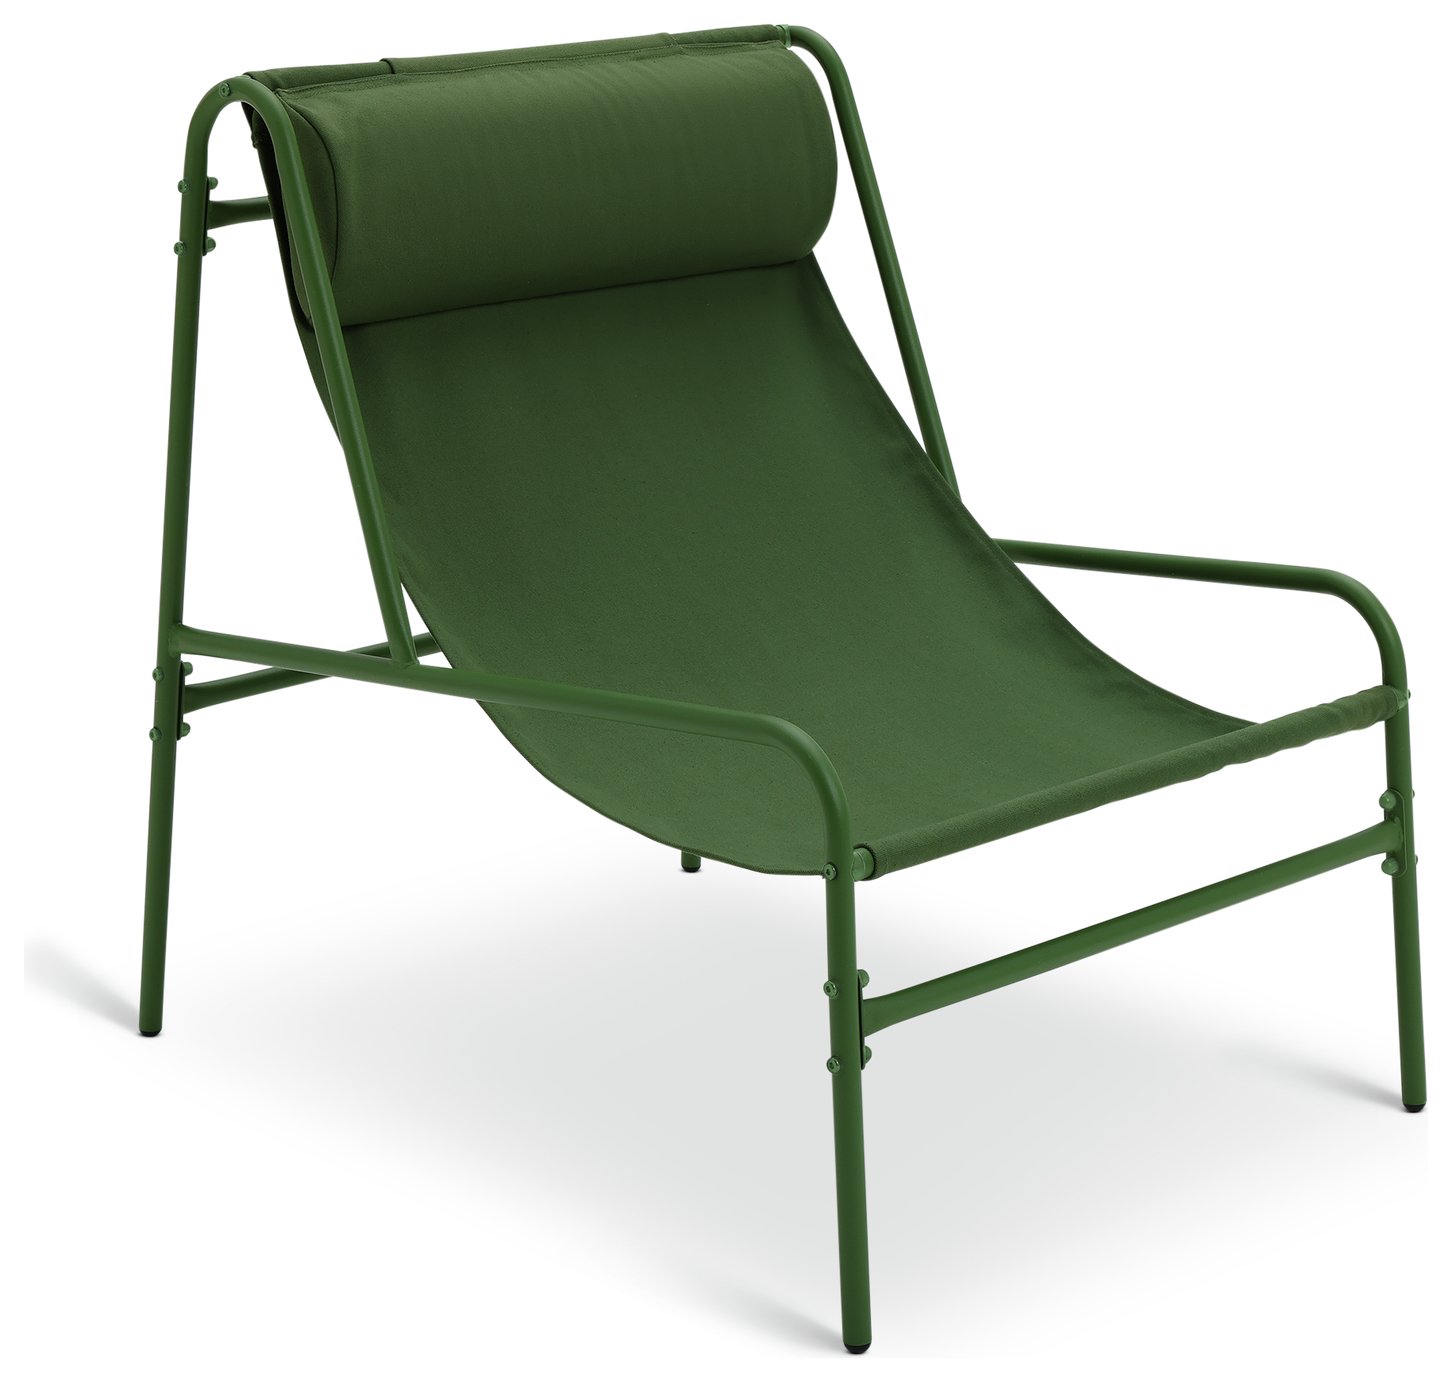 Habitat Teka Metal Garden Chair - Green